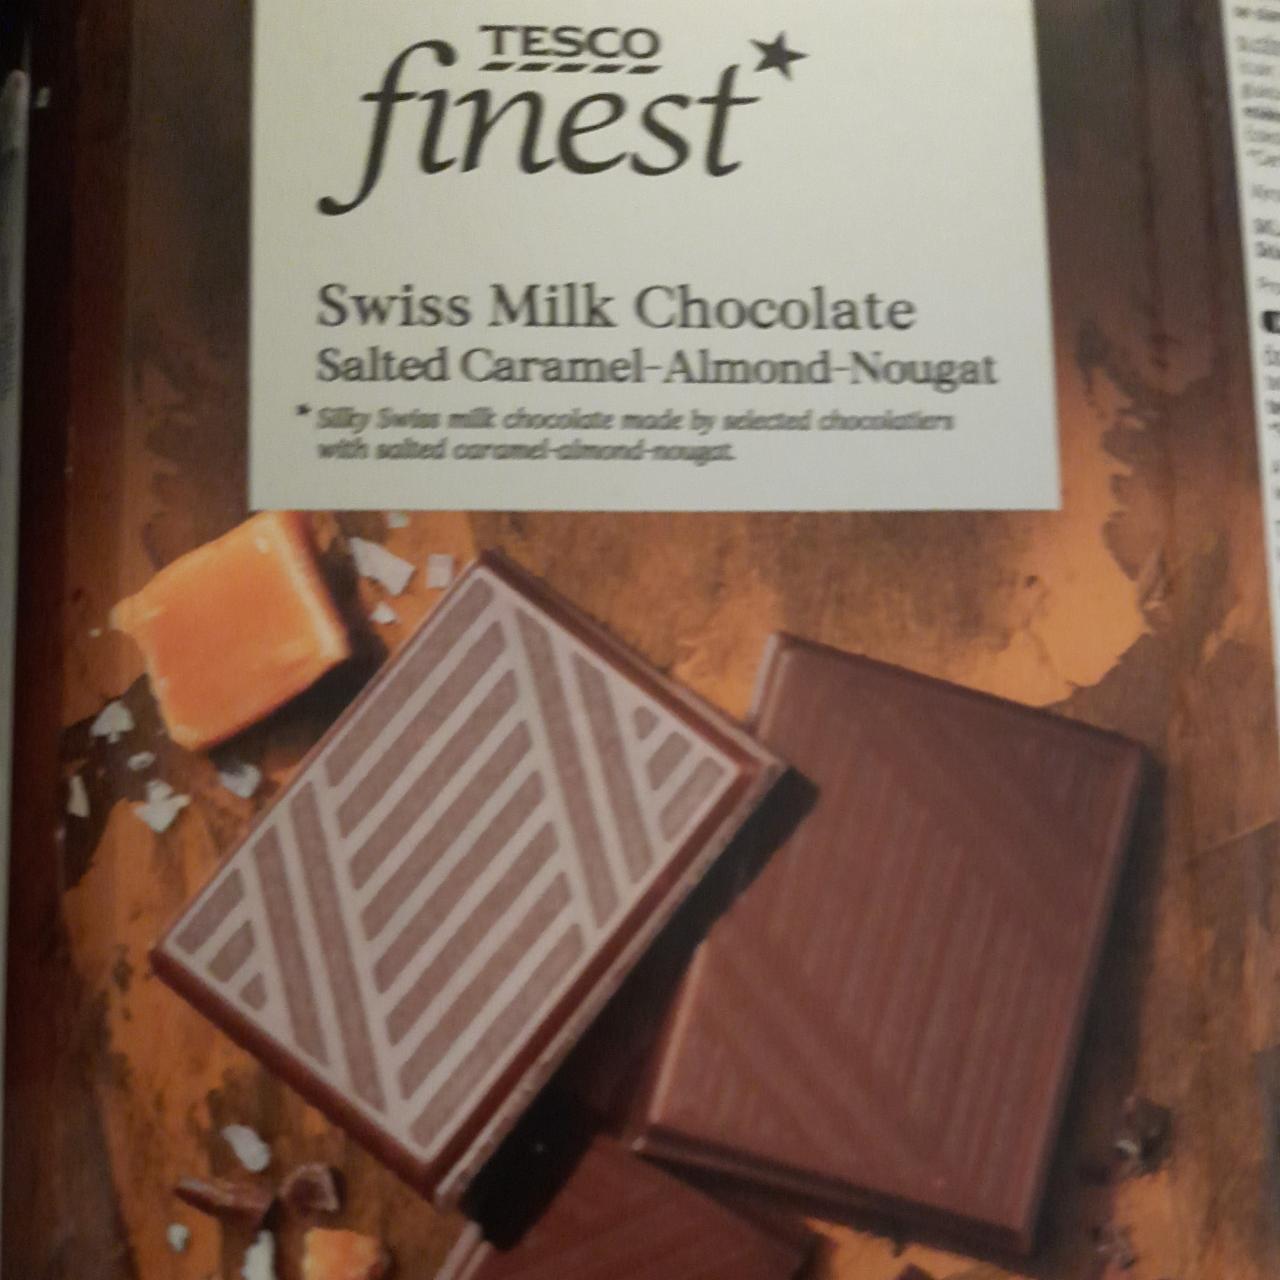 Fotografie - Swiss Milk Chocolate Salted Caramel-Almond-Nougat Tesco finest